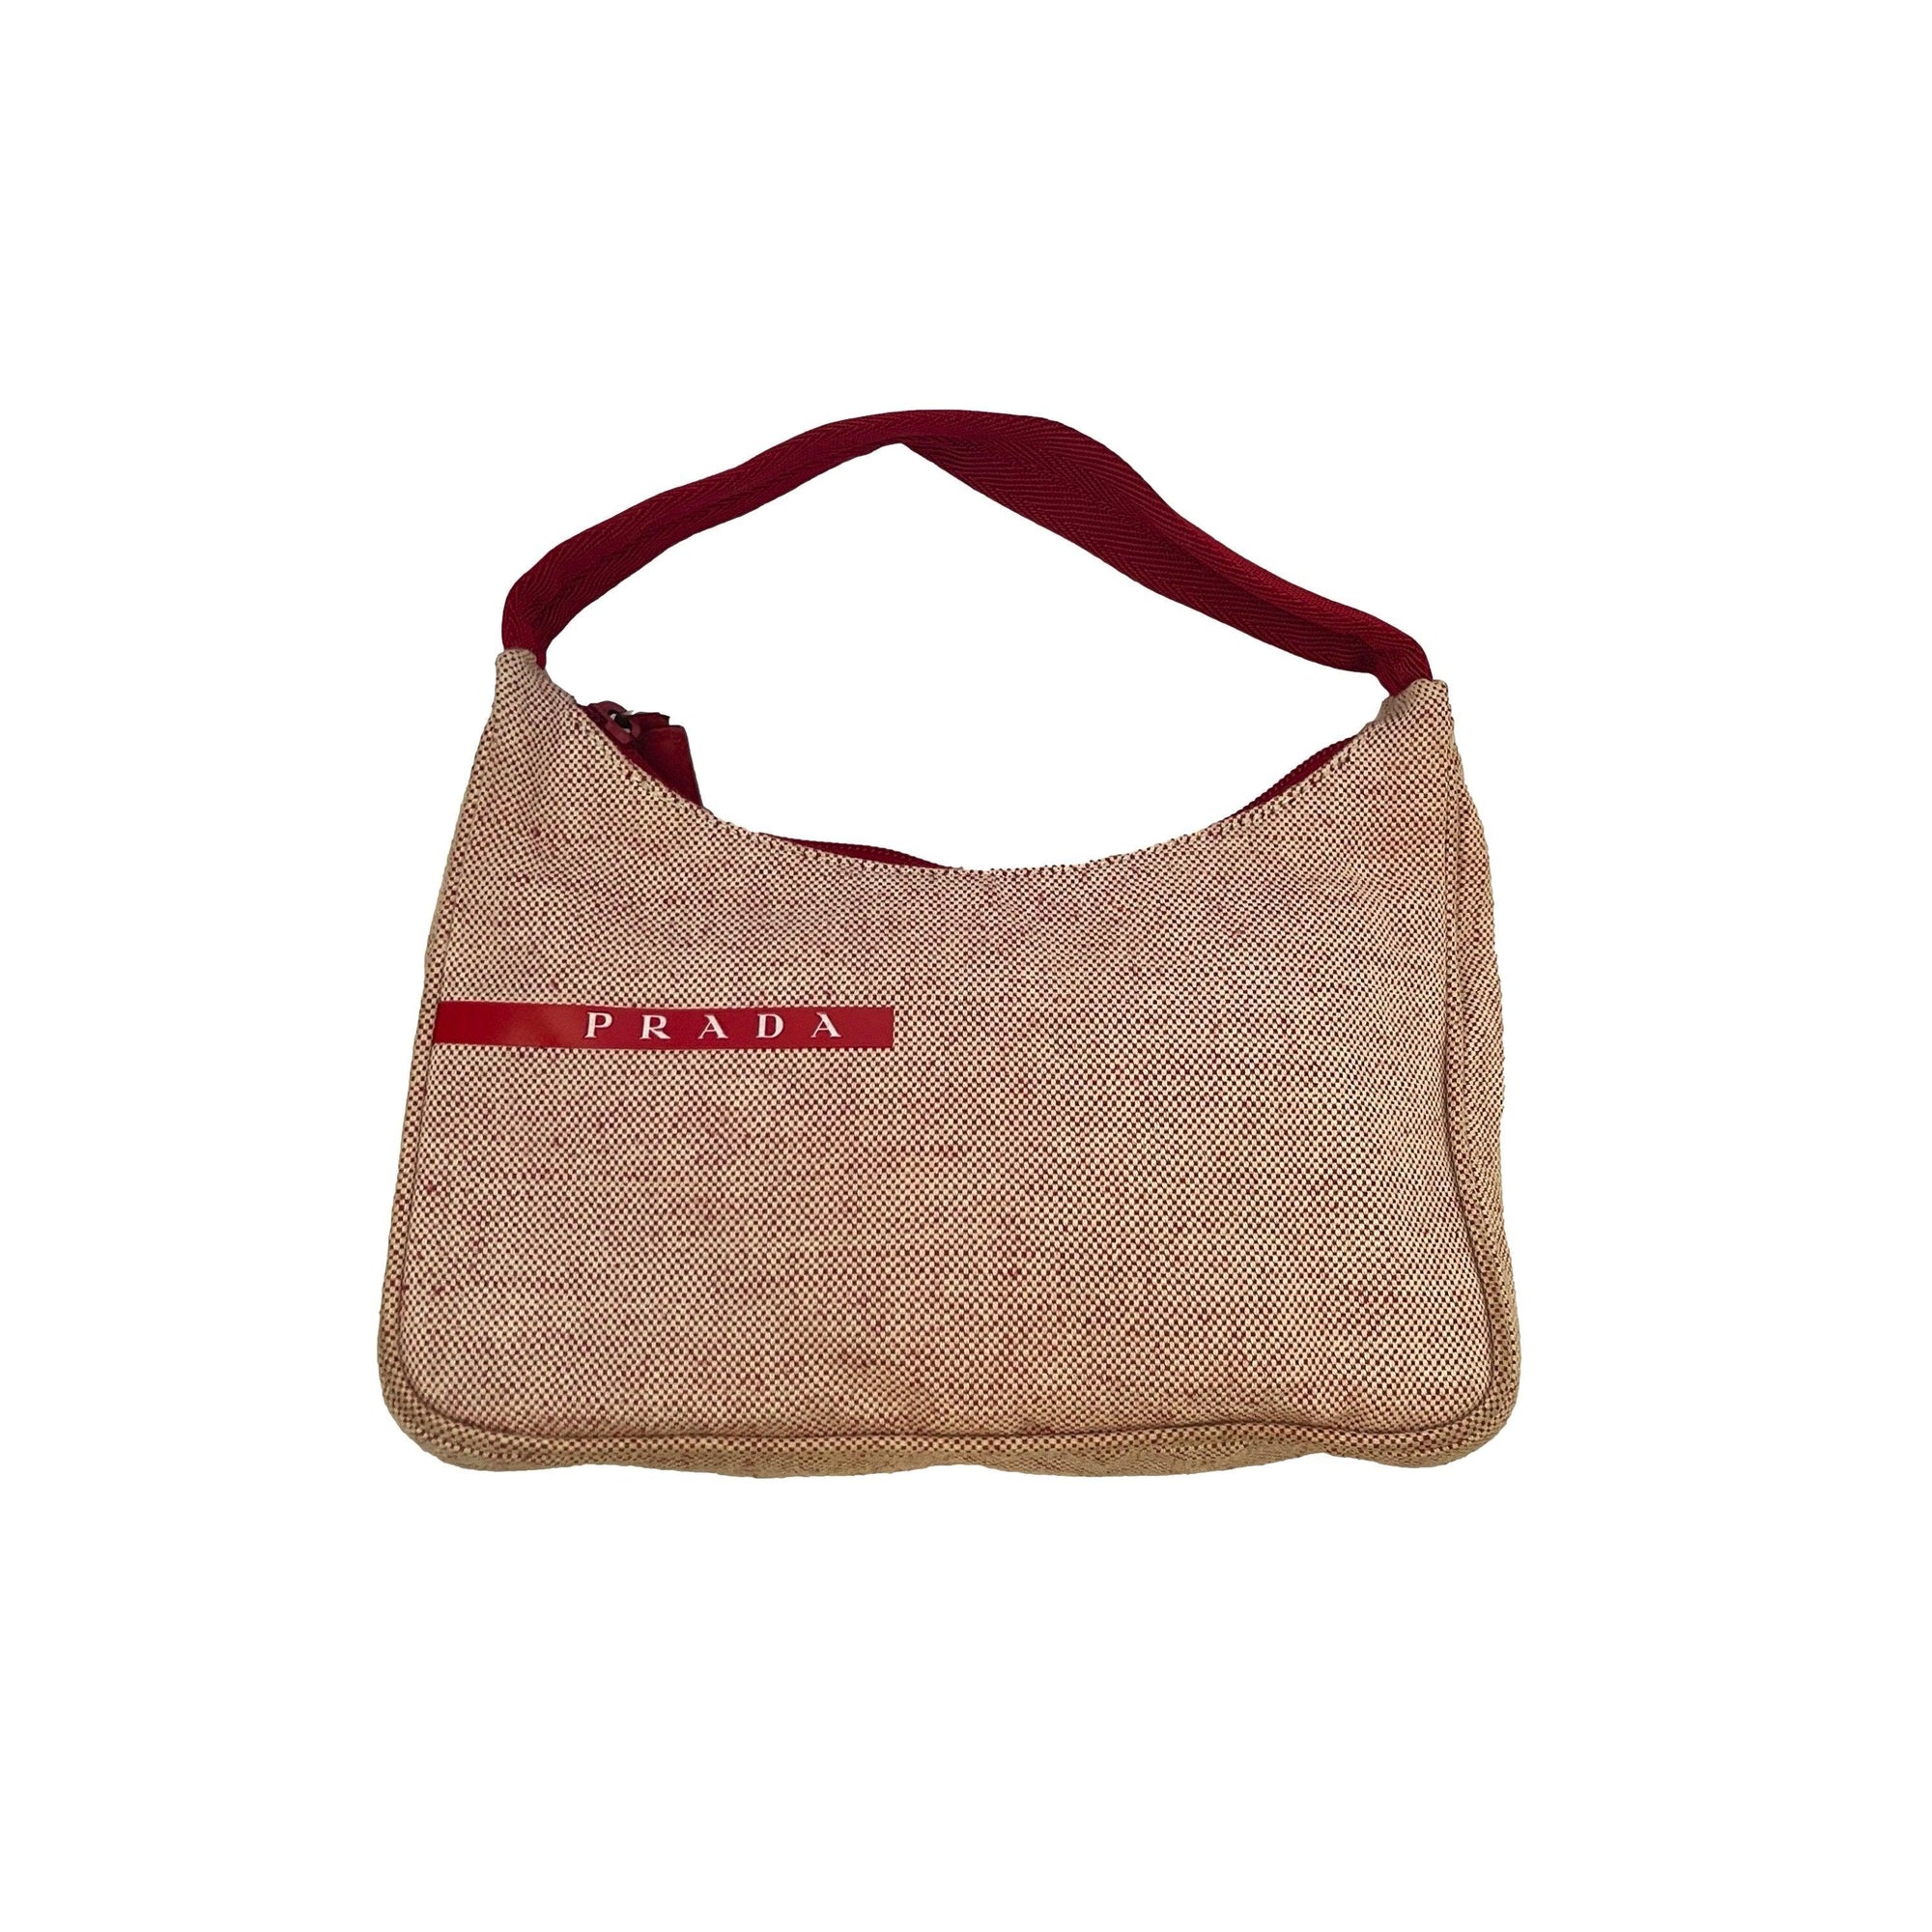 Prada Red Canvas Shoulder Bag - Handbags